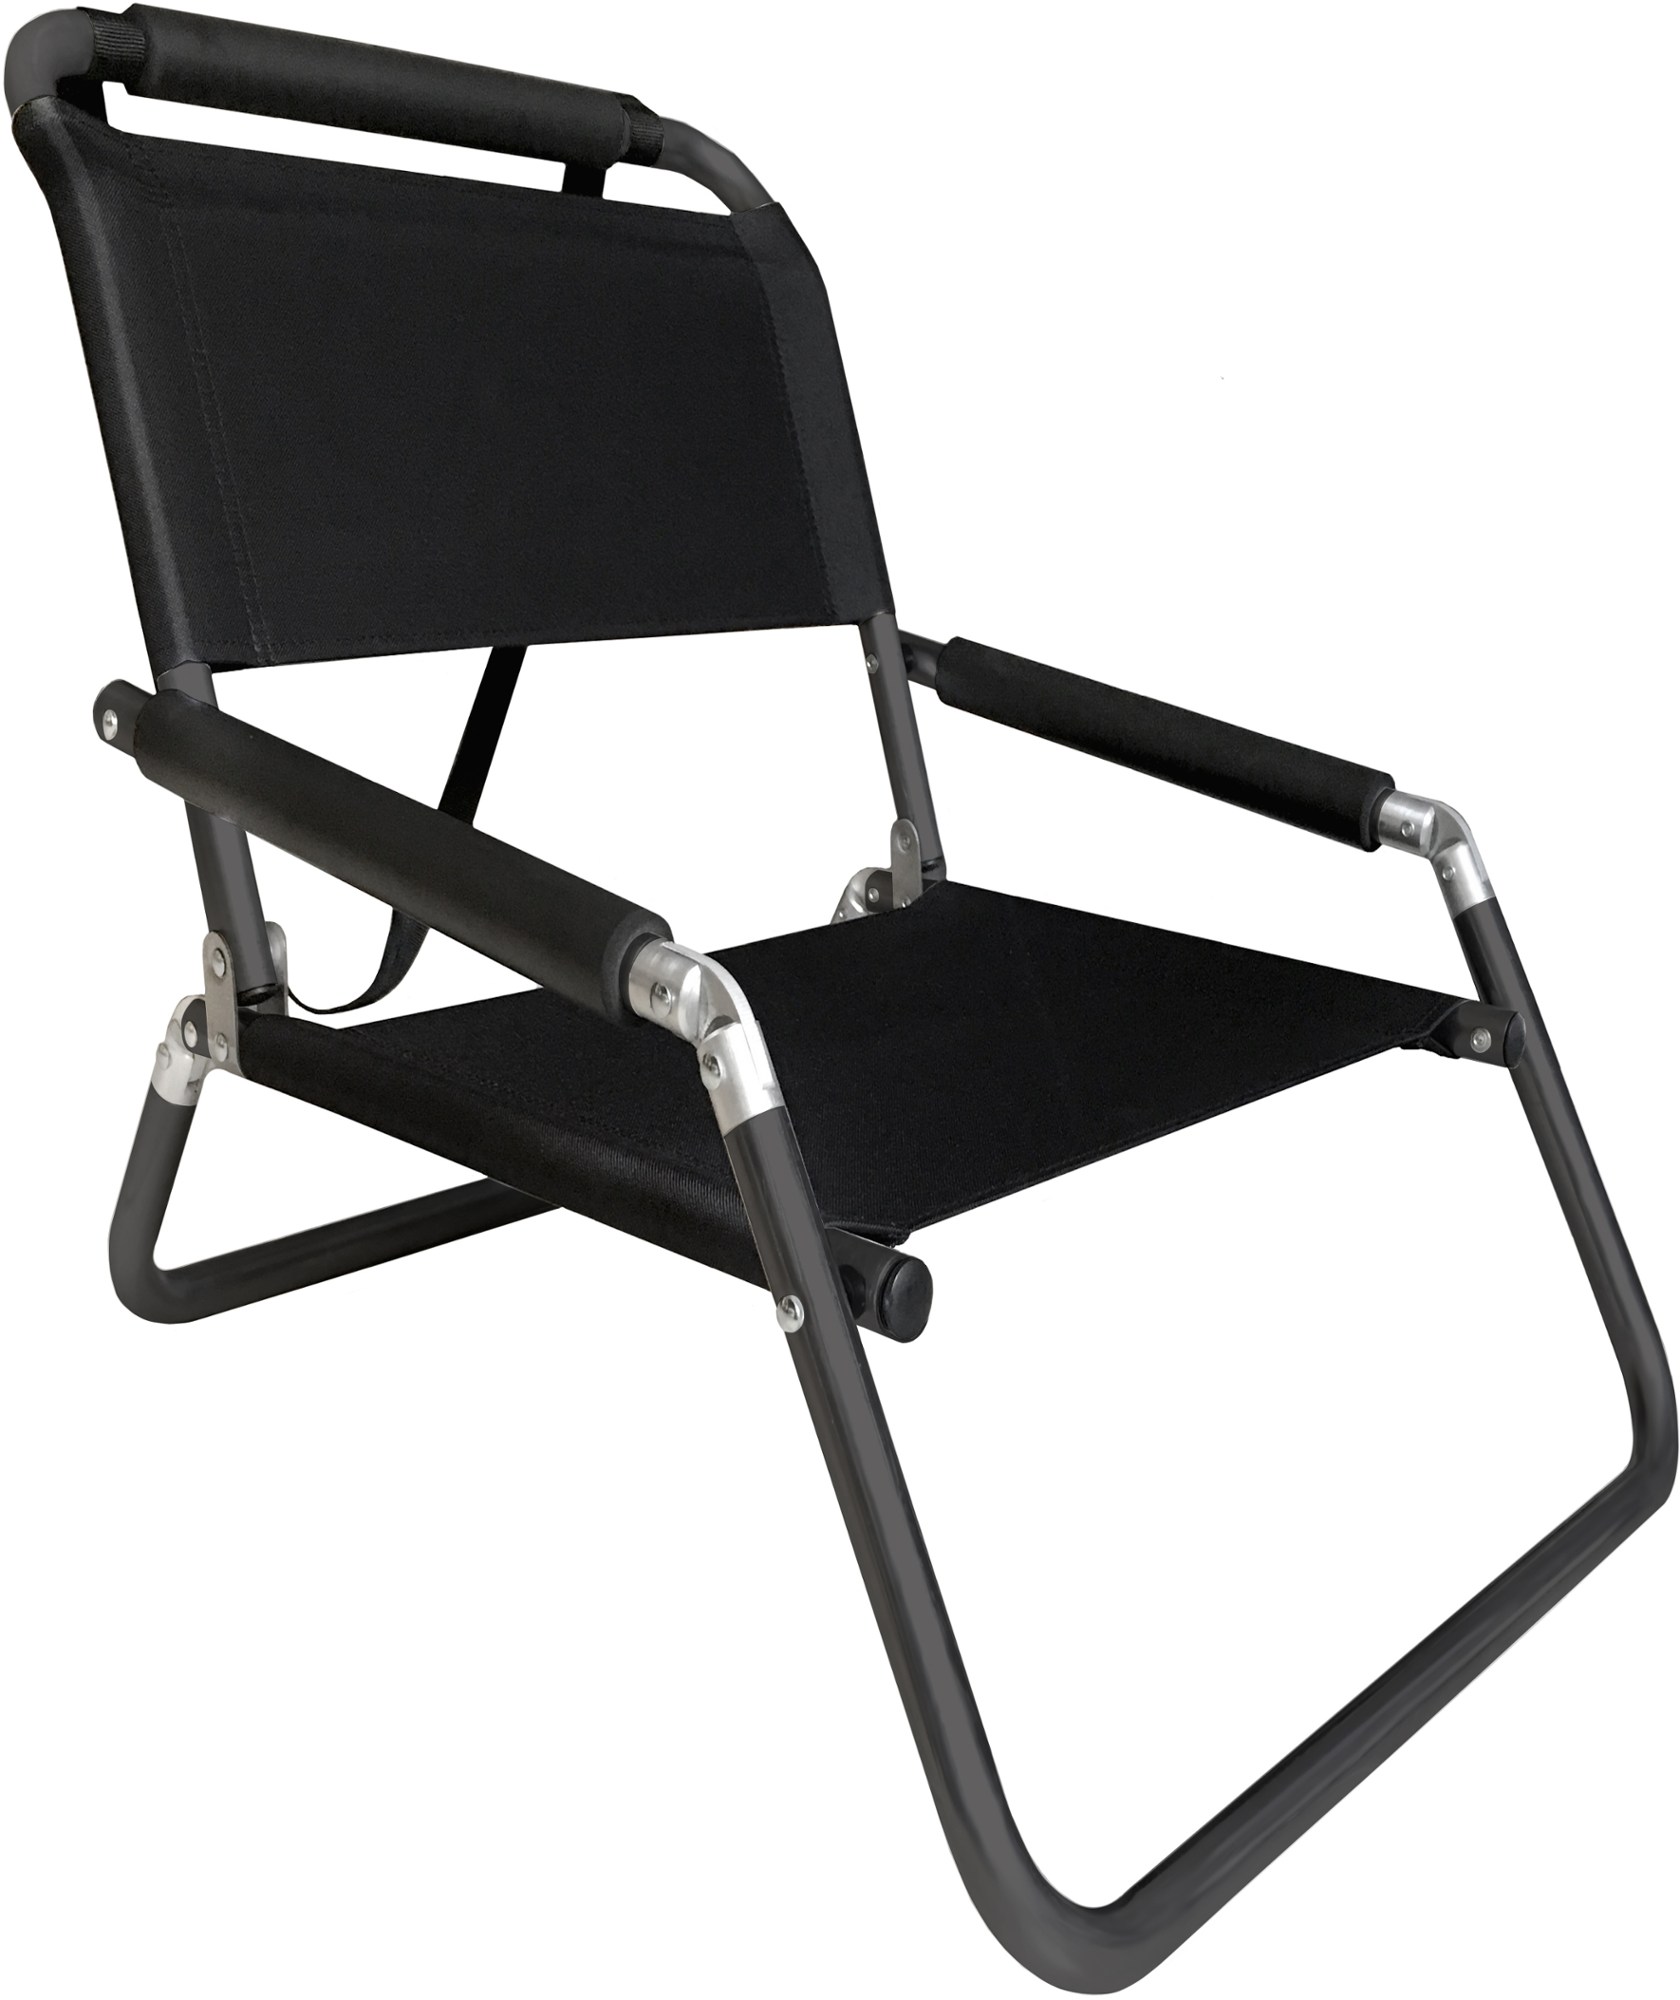 Пляжный стул XL Neso, черный beach chair cover microfiber lounge chair towel rack beach mat holiday camping leisure recliner backrest colorful pool chaise